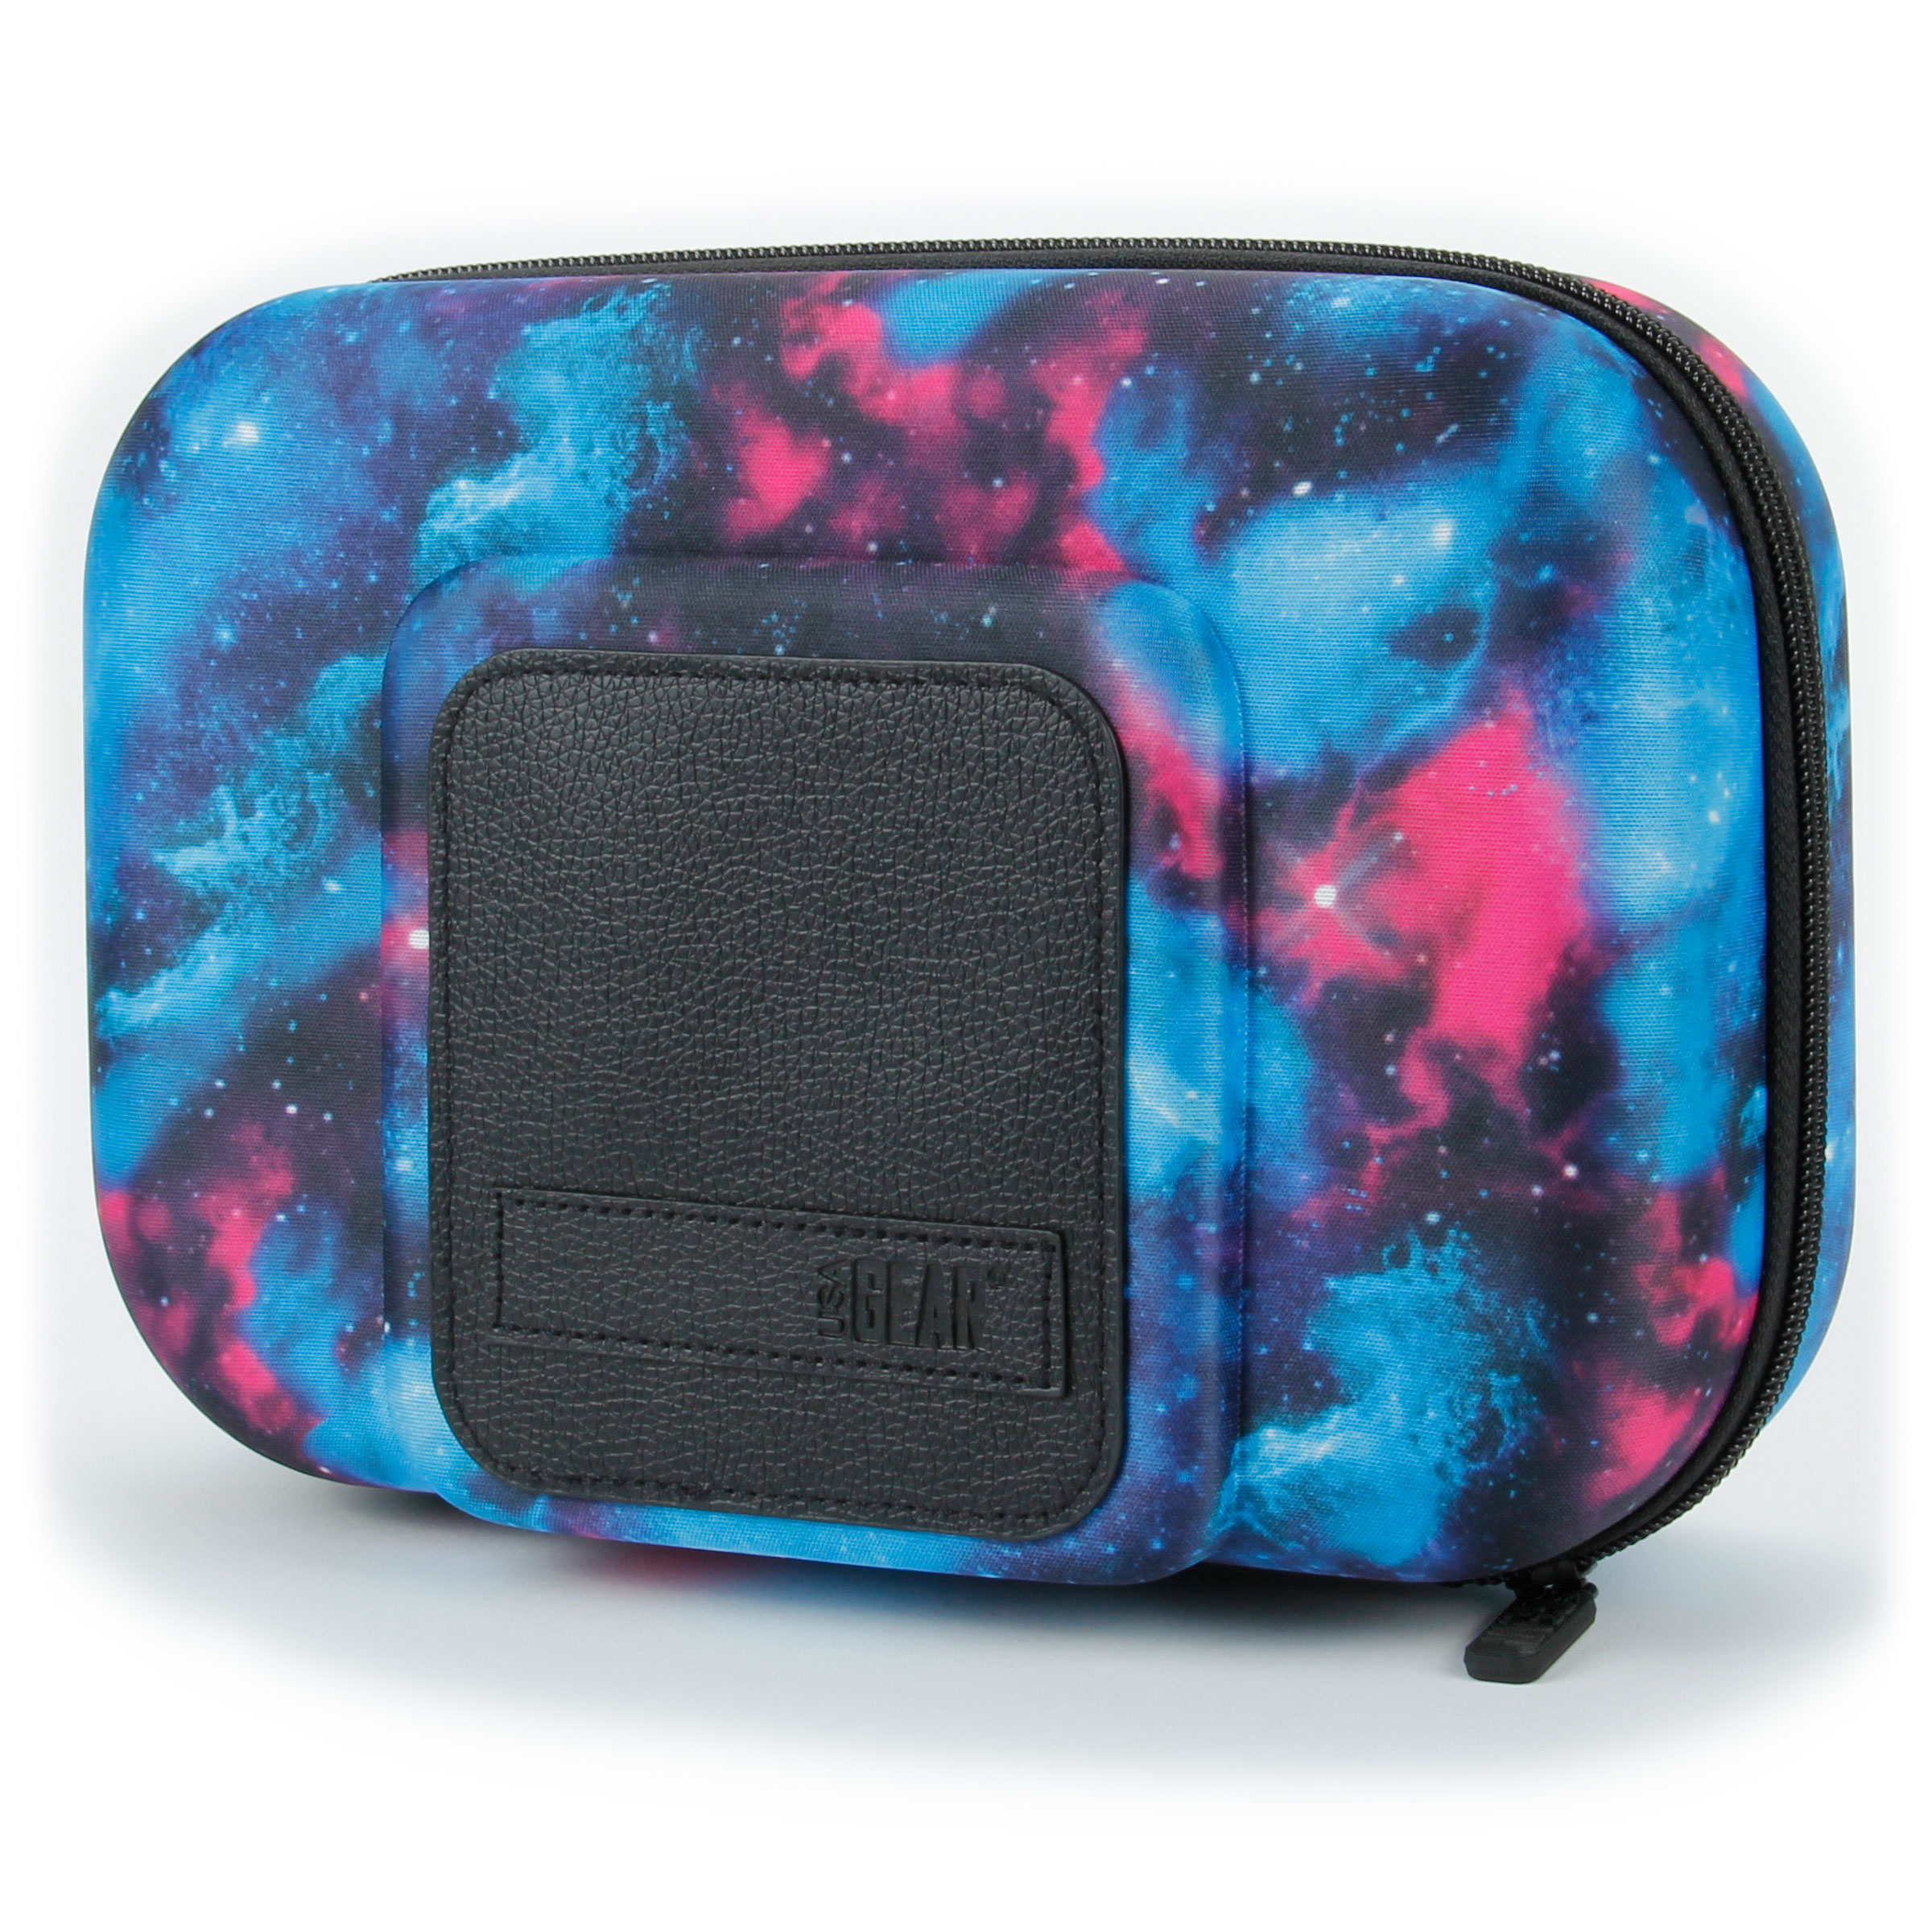 USA GEAR Toiletry Travel Bag Organizer, Customizable Storage Pockets, Nylon Hard Shell - Galaxy - image 1 of 8